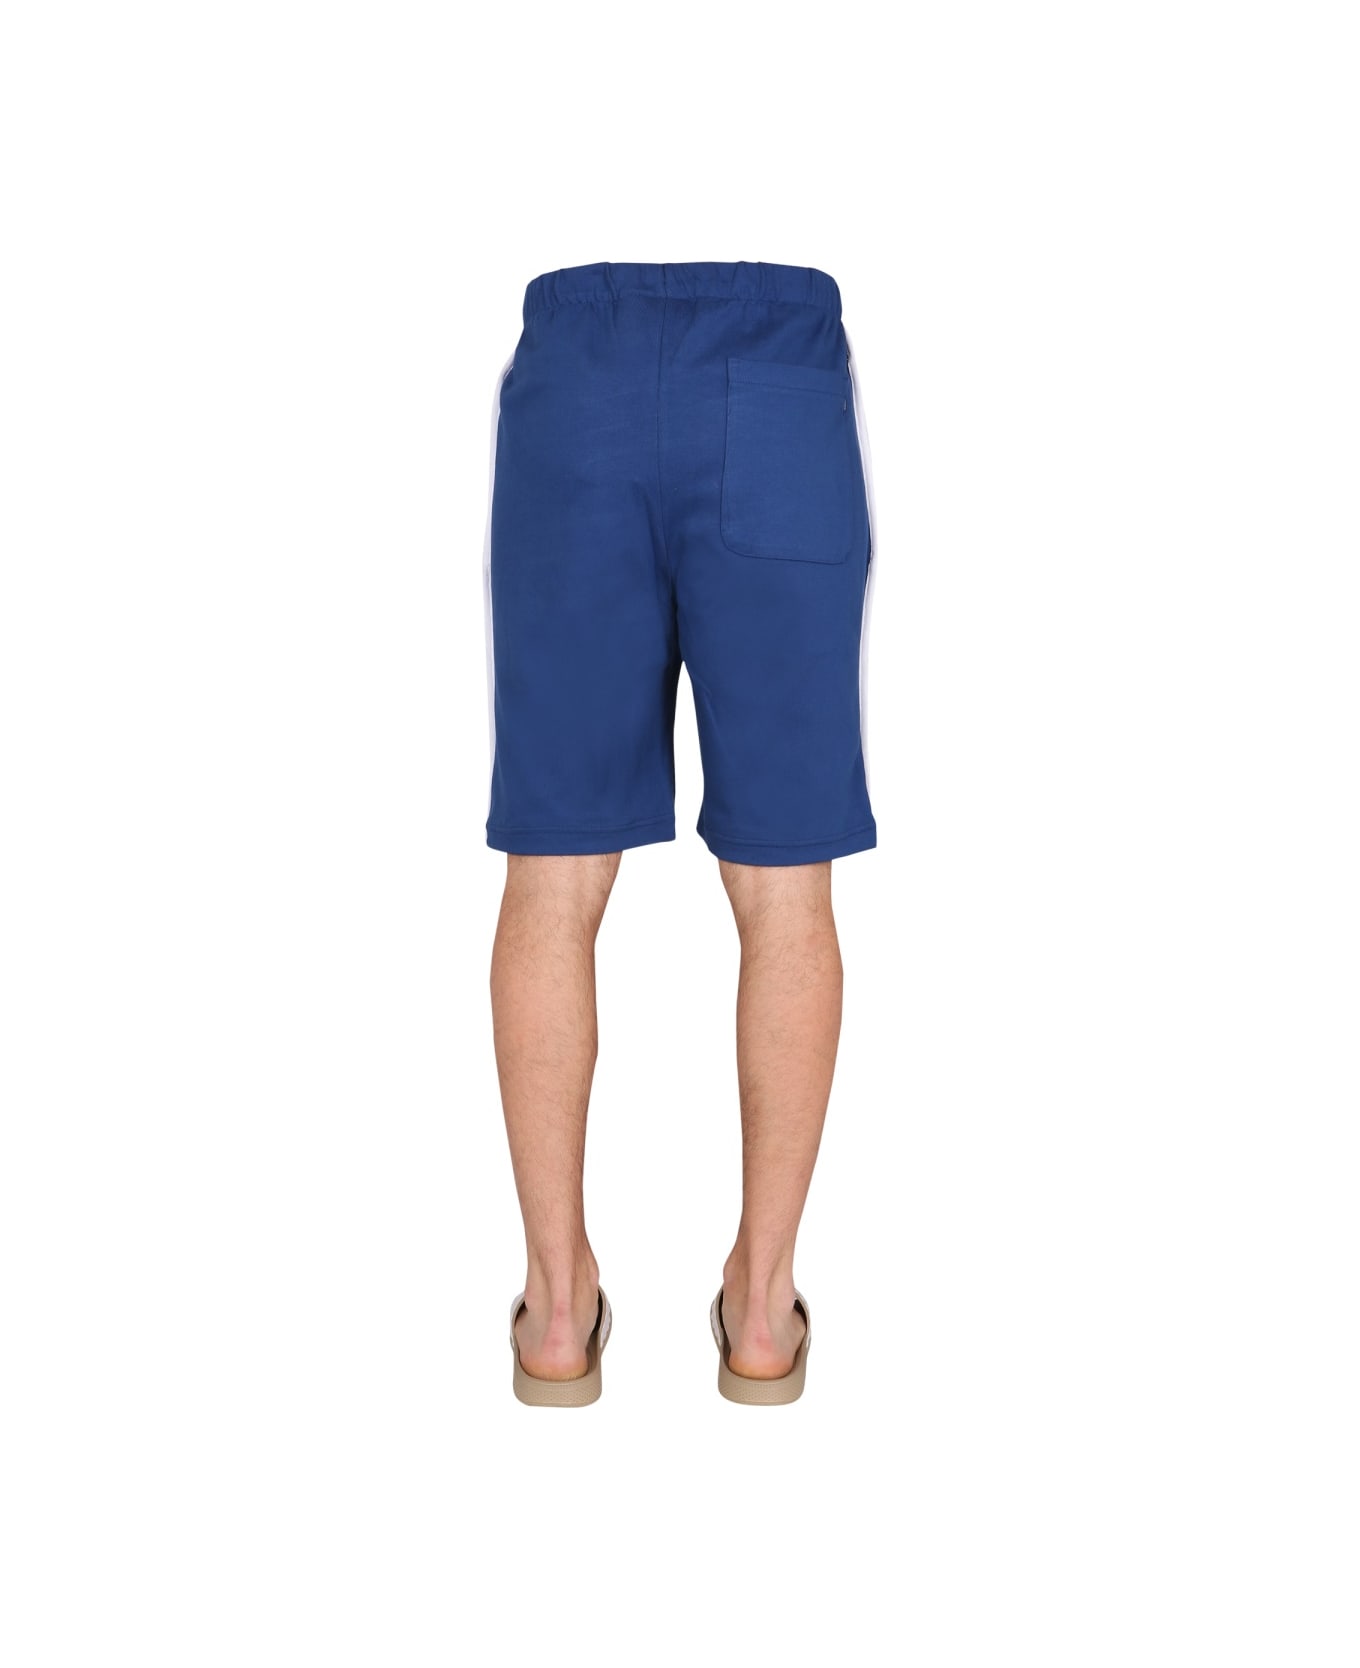 Telfar Cotton Sweat Shorts Bermuda - BLUE ショートパンツ